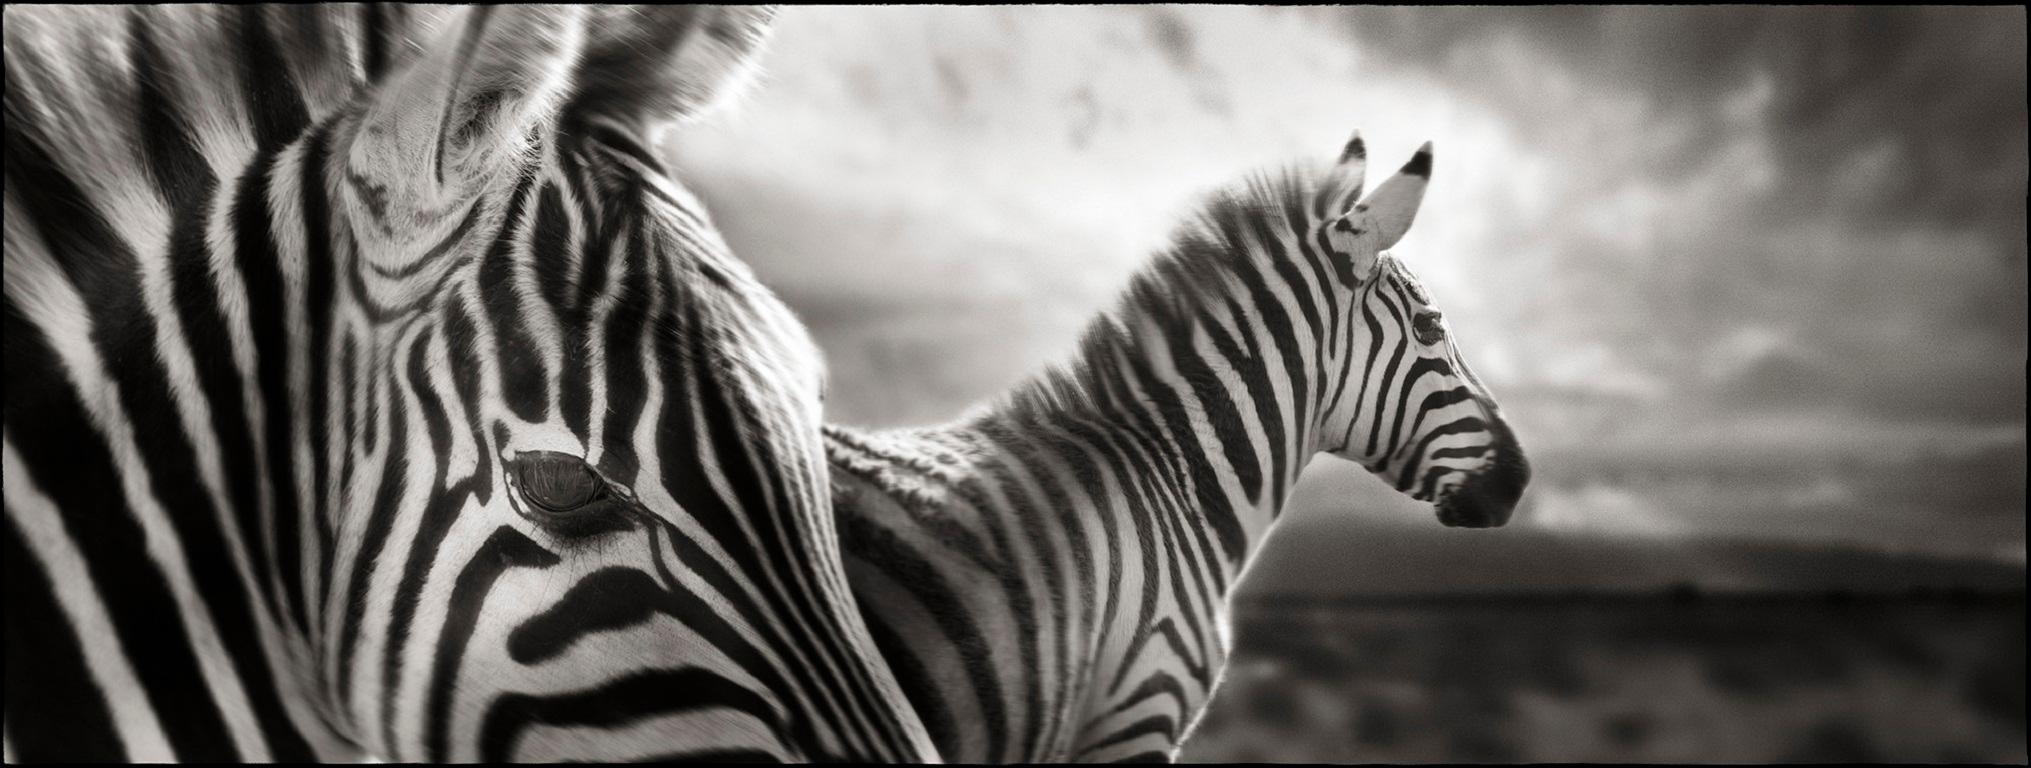 Joachim Schmeisser Still-Life Photograph - Zebra Duo - Close-Up fine art photography of two zebras in landscape, wildlife